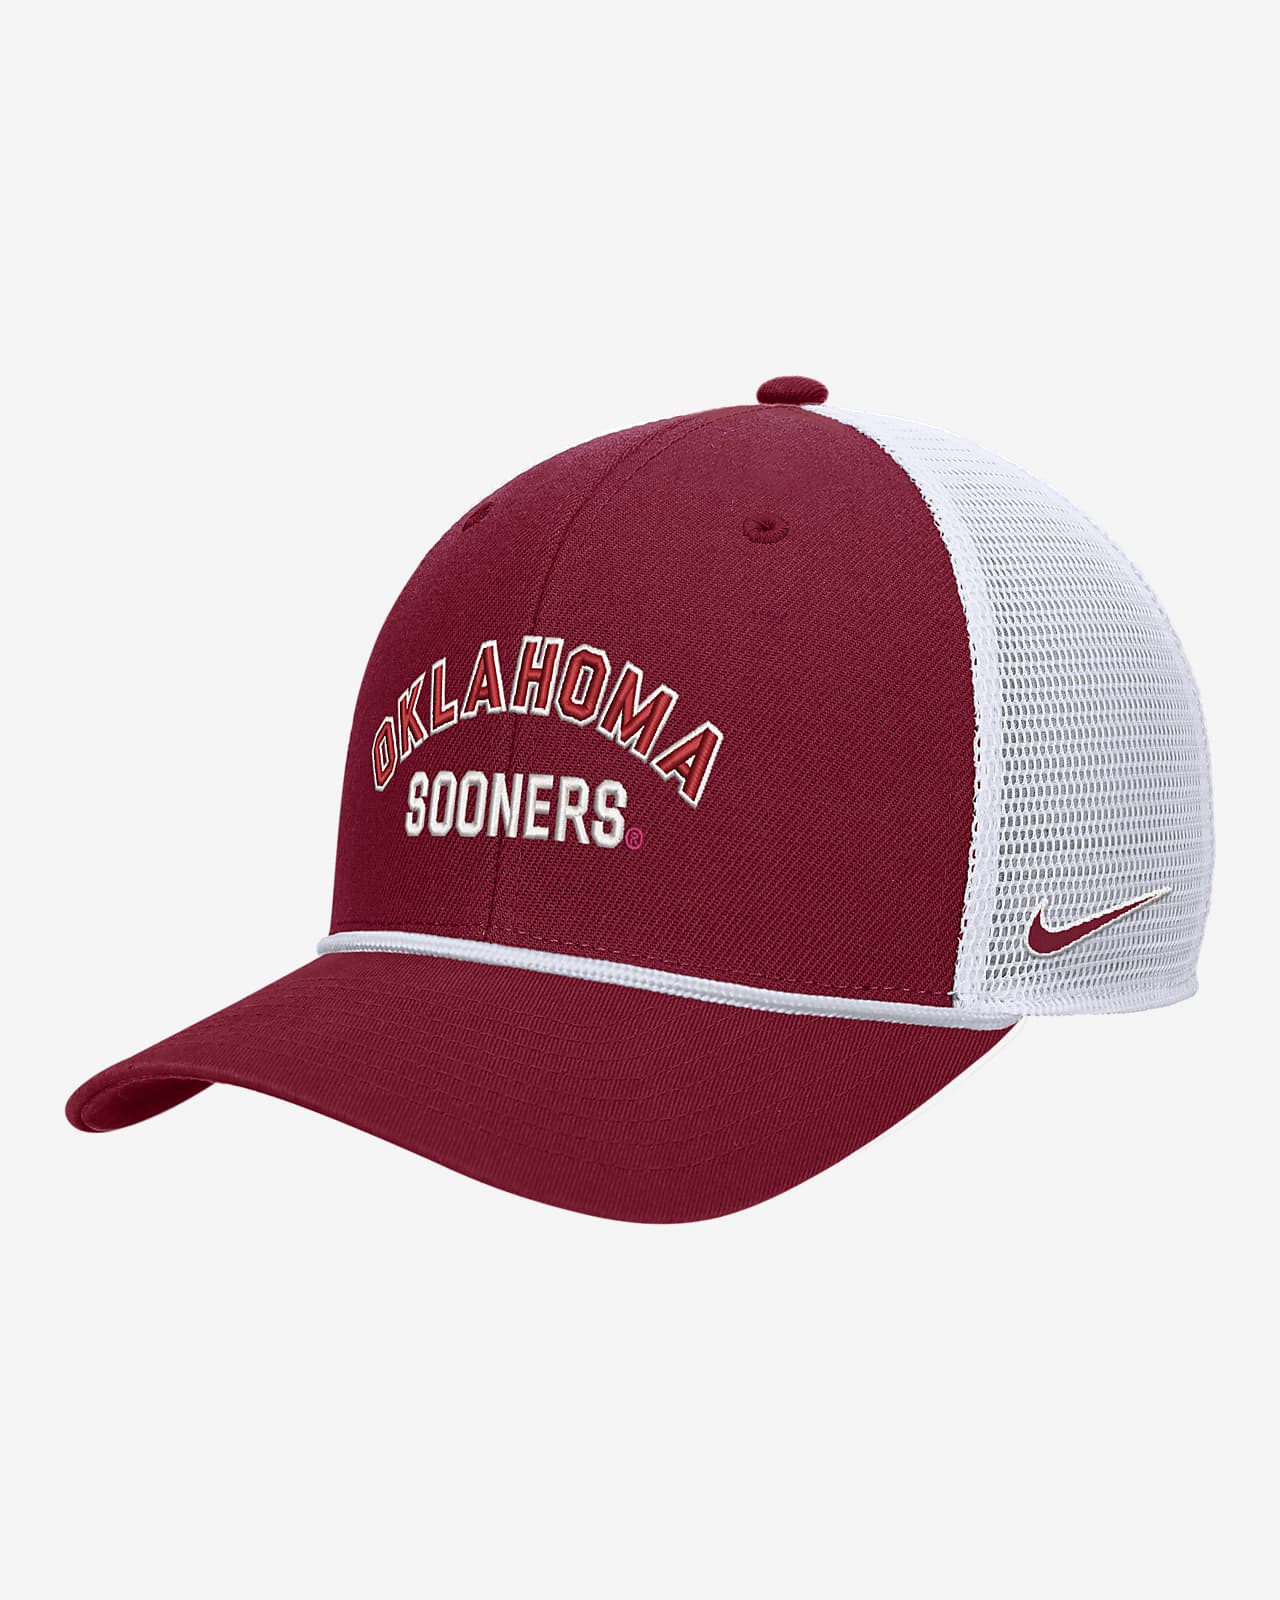 Oklahoma Nike College Snapback Trucker Hat